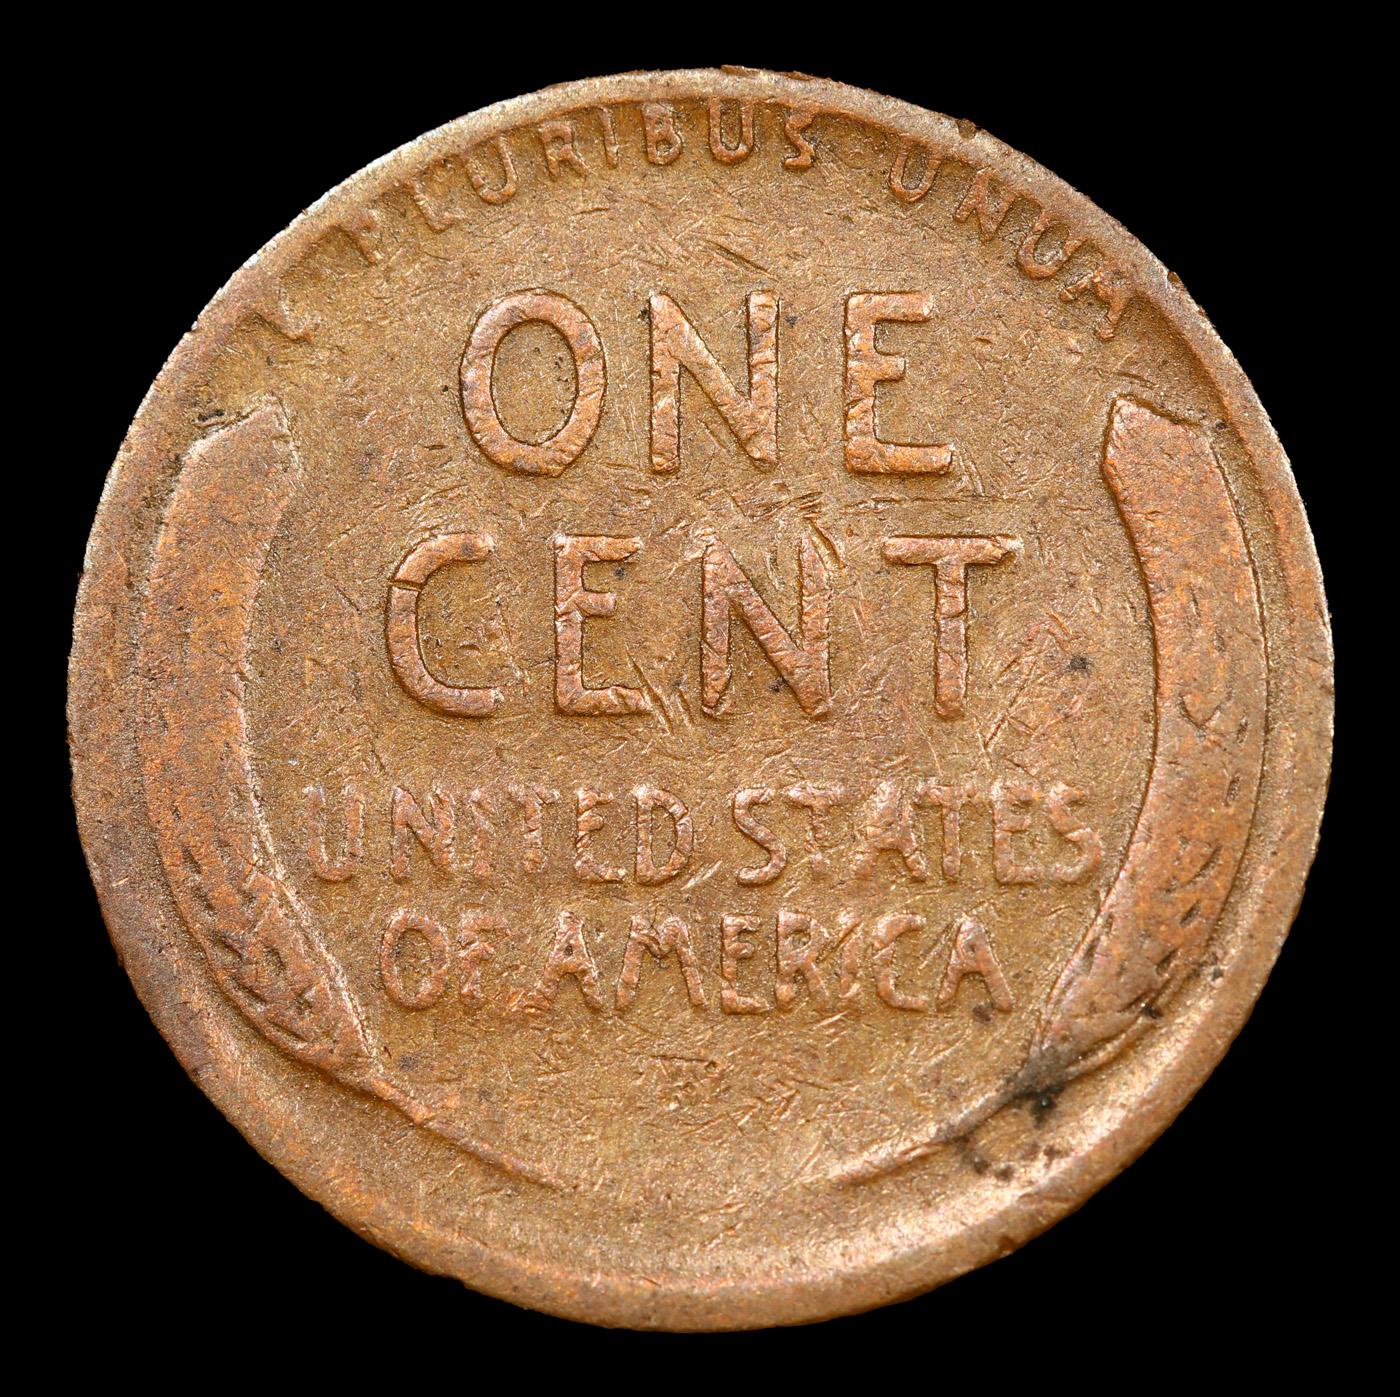 1944-d Lincoln Cent *Mint Error* 1c Grades vf++